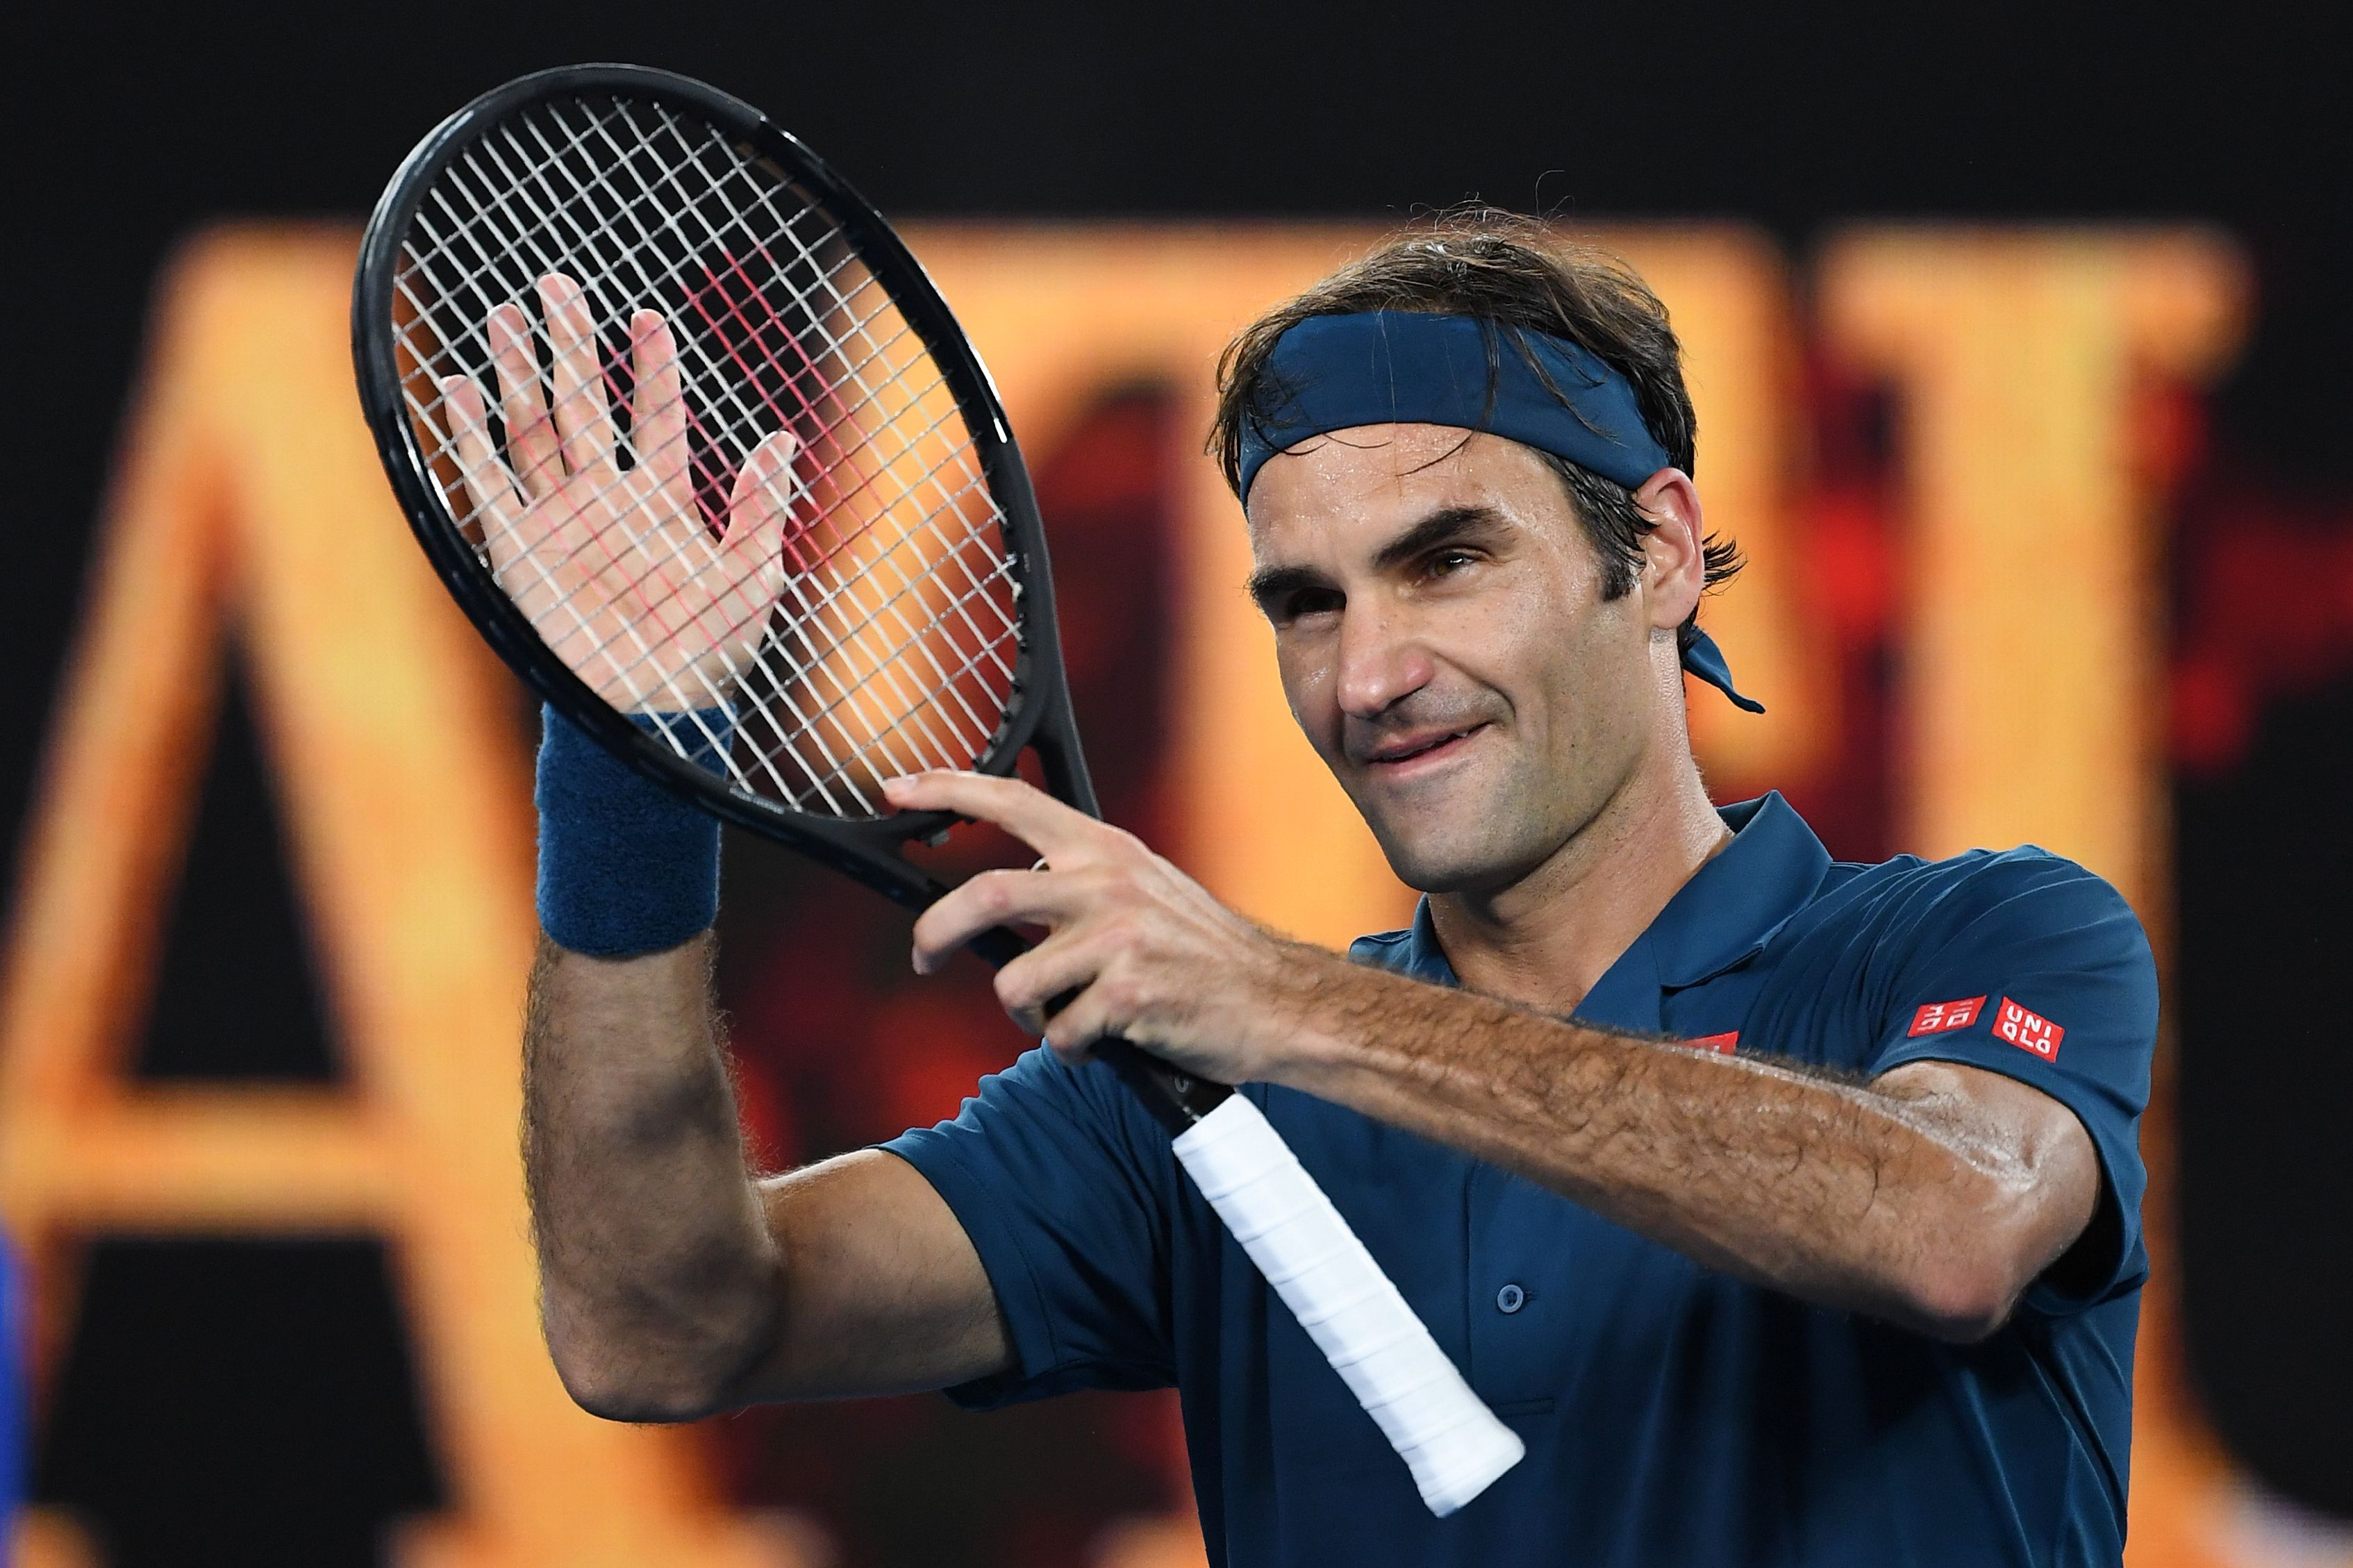 Watch: Federer’s little son steals the show 